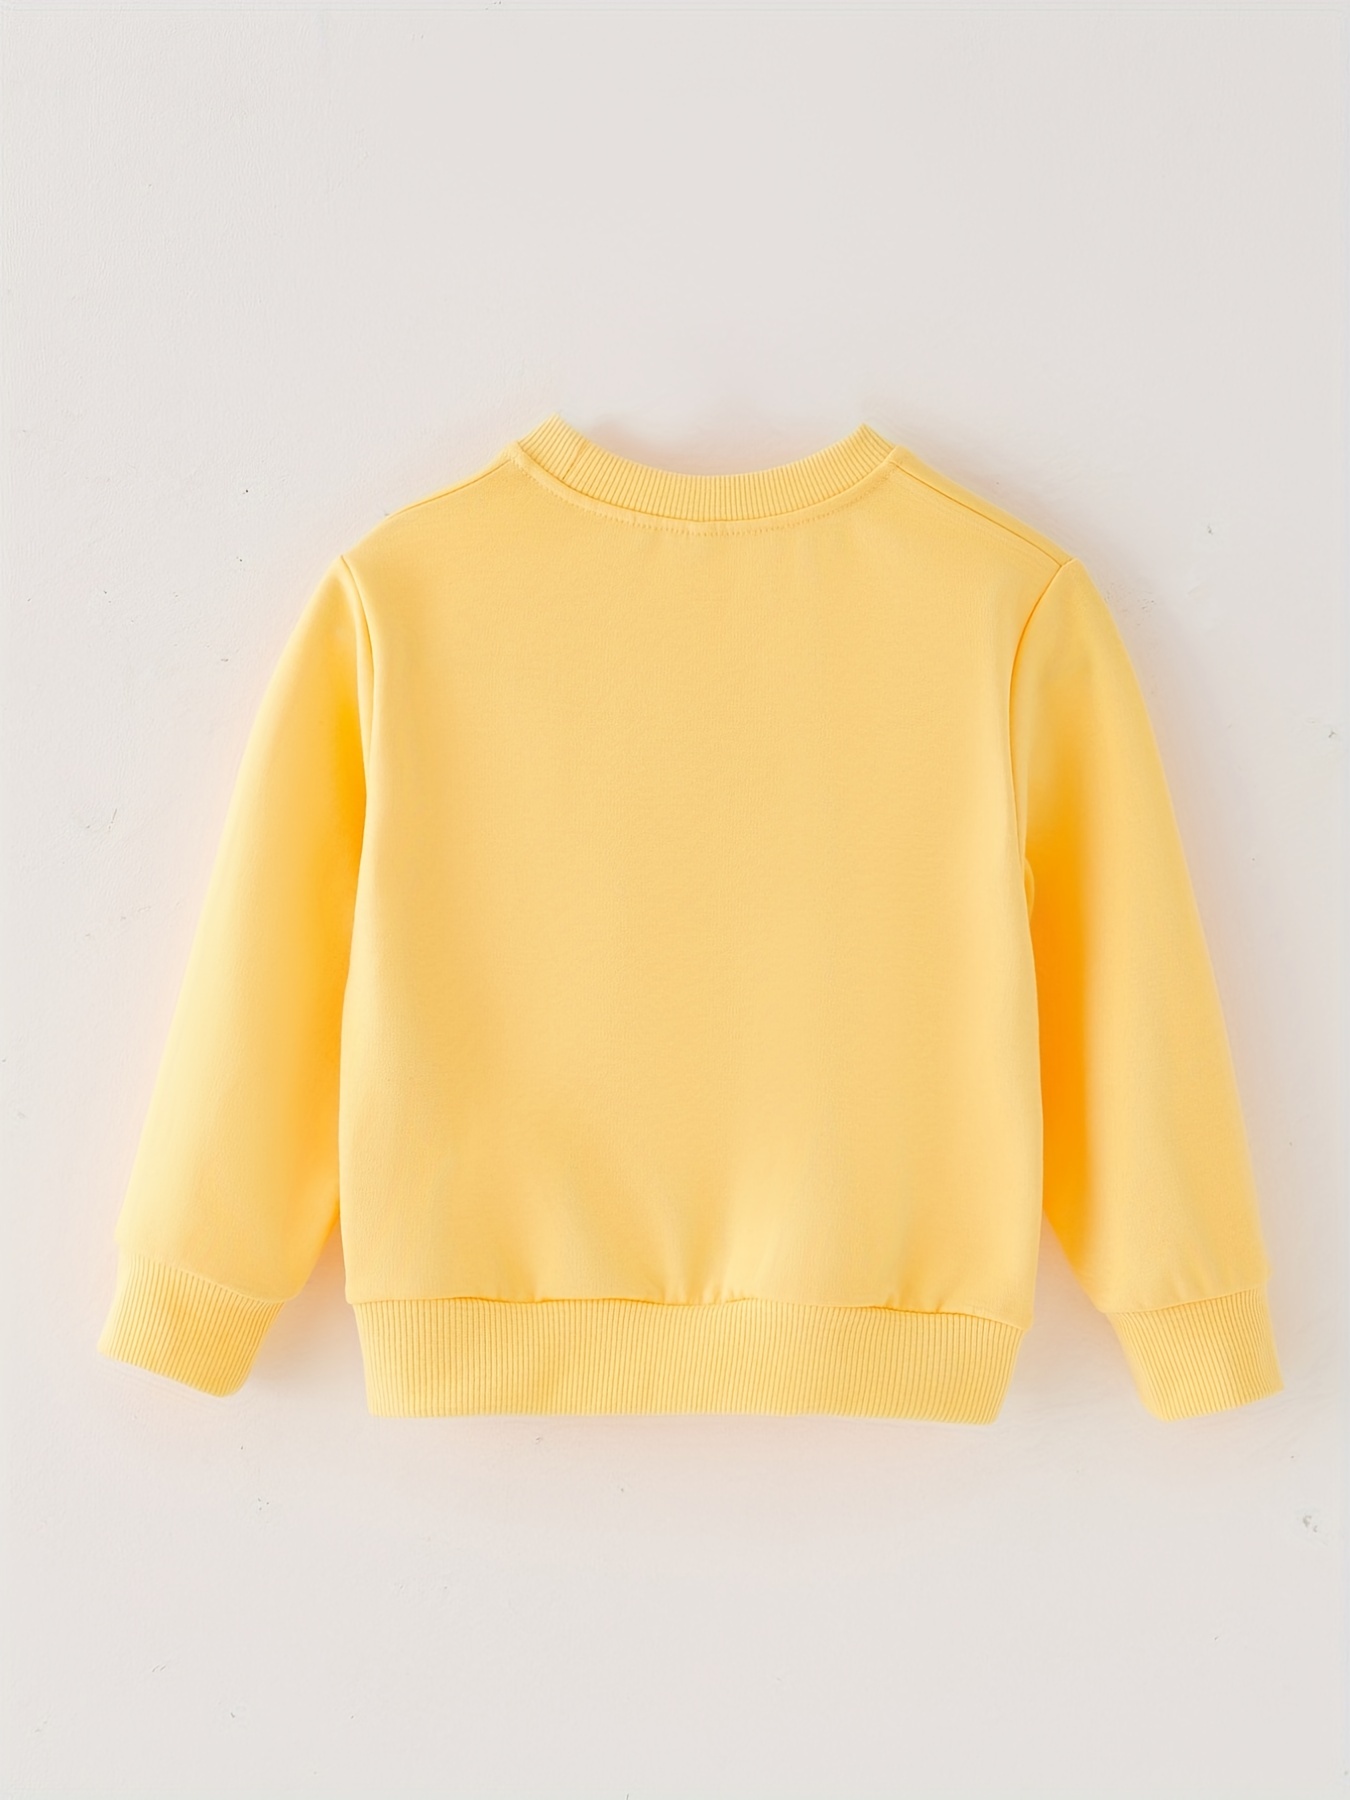 Meijaata Round Neck Tri Color Girls Sweatshirt, Size: Extra Small